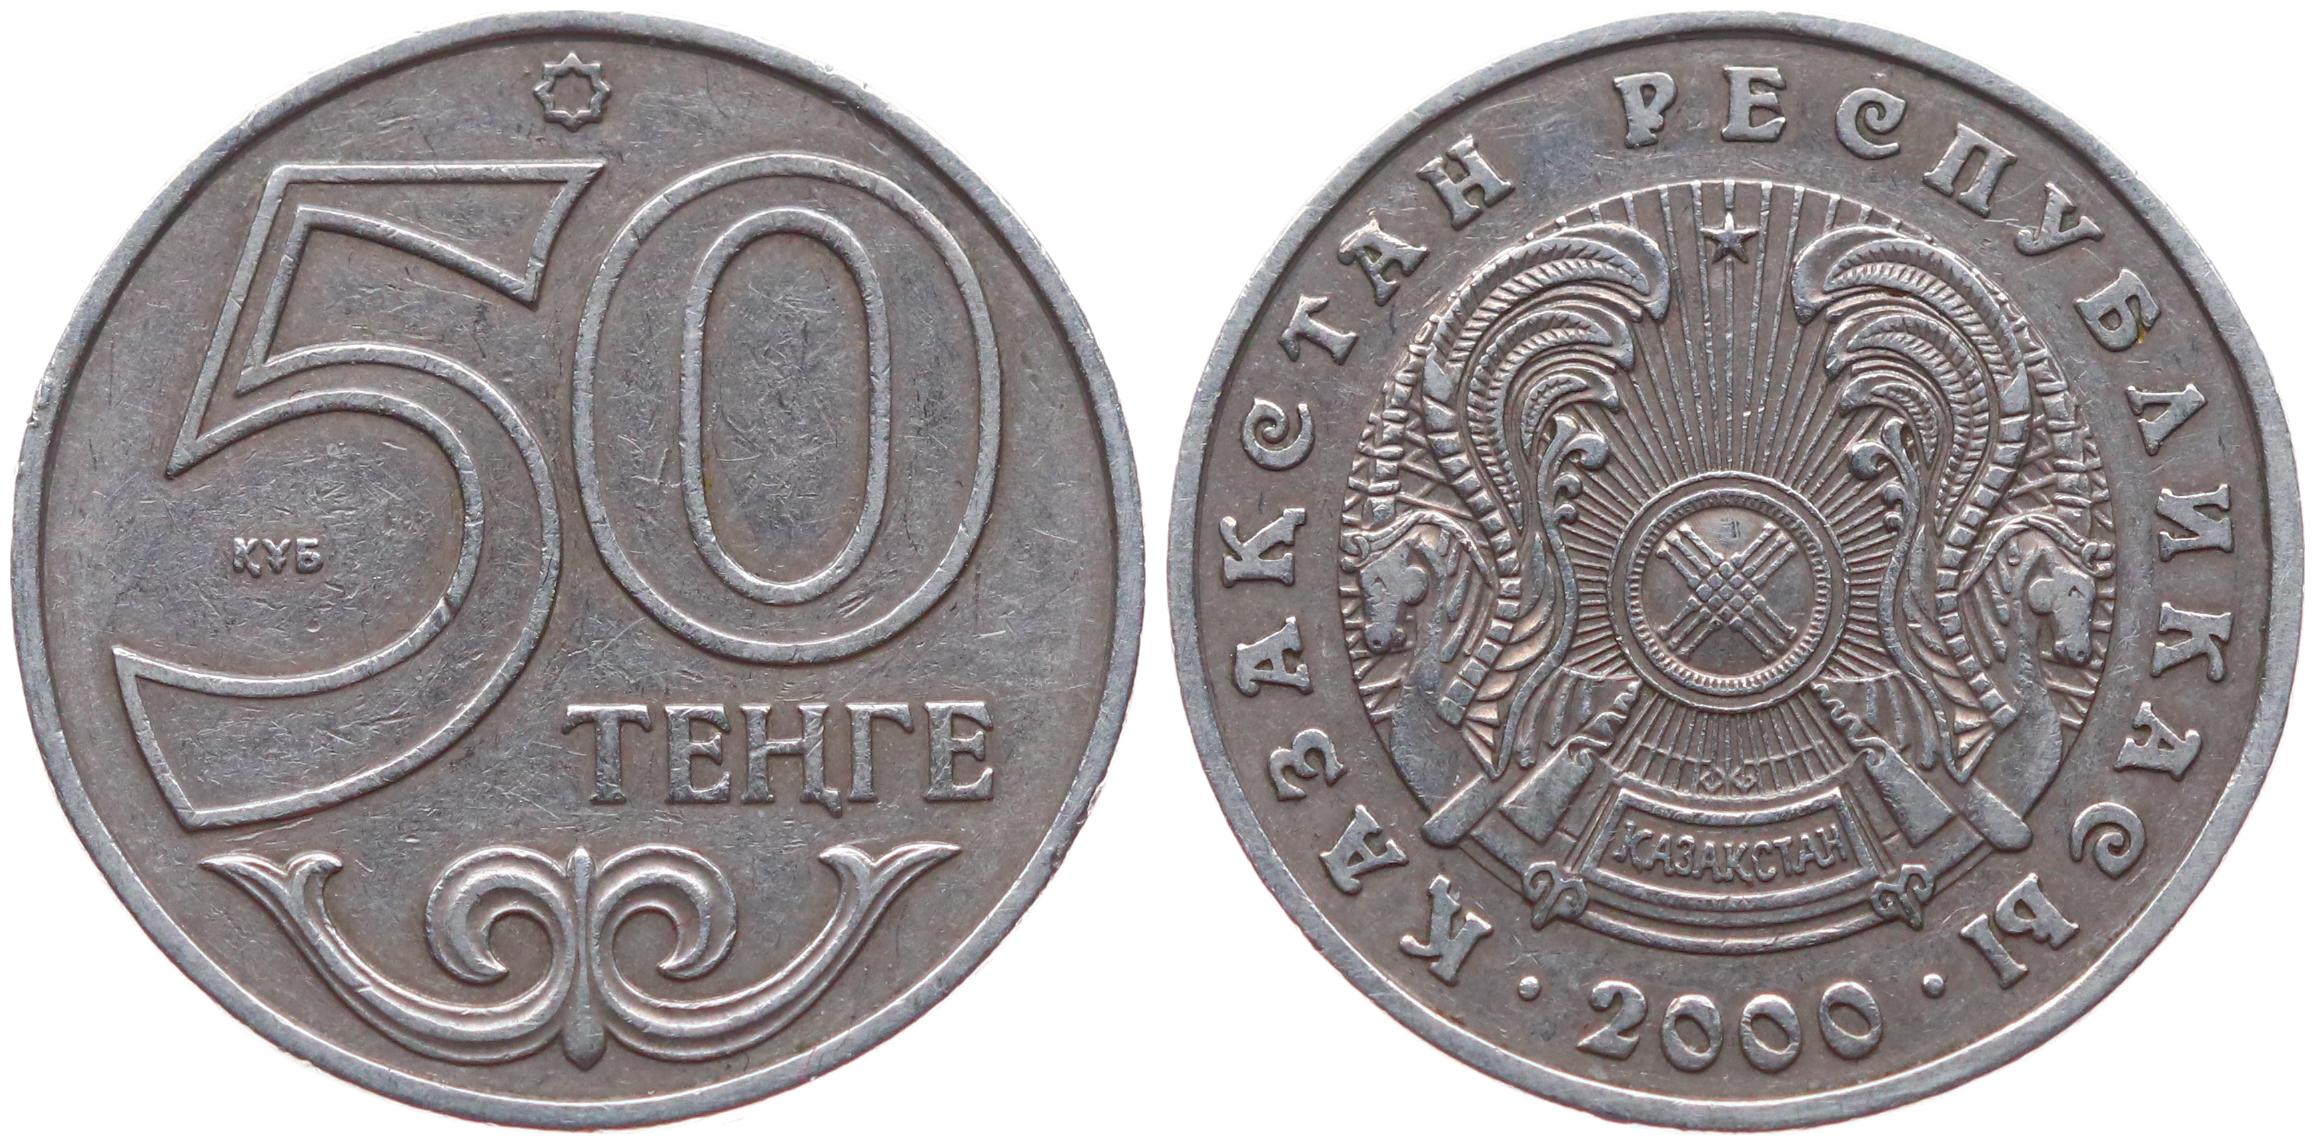 Казахстан 50 тенге 2000. Монета Казахстана 50 тенге 2000 г. Монеты Казахстана 50 тенге. Аверс 50 тенге.